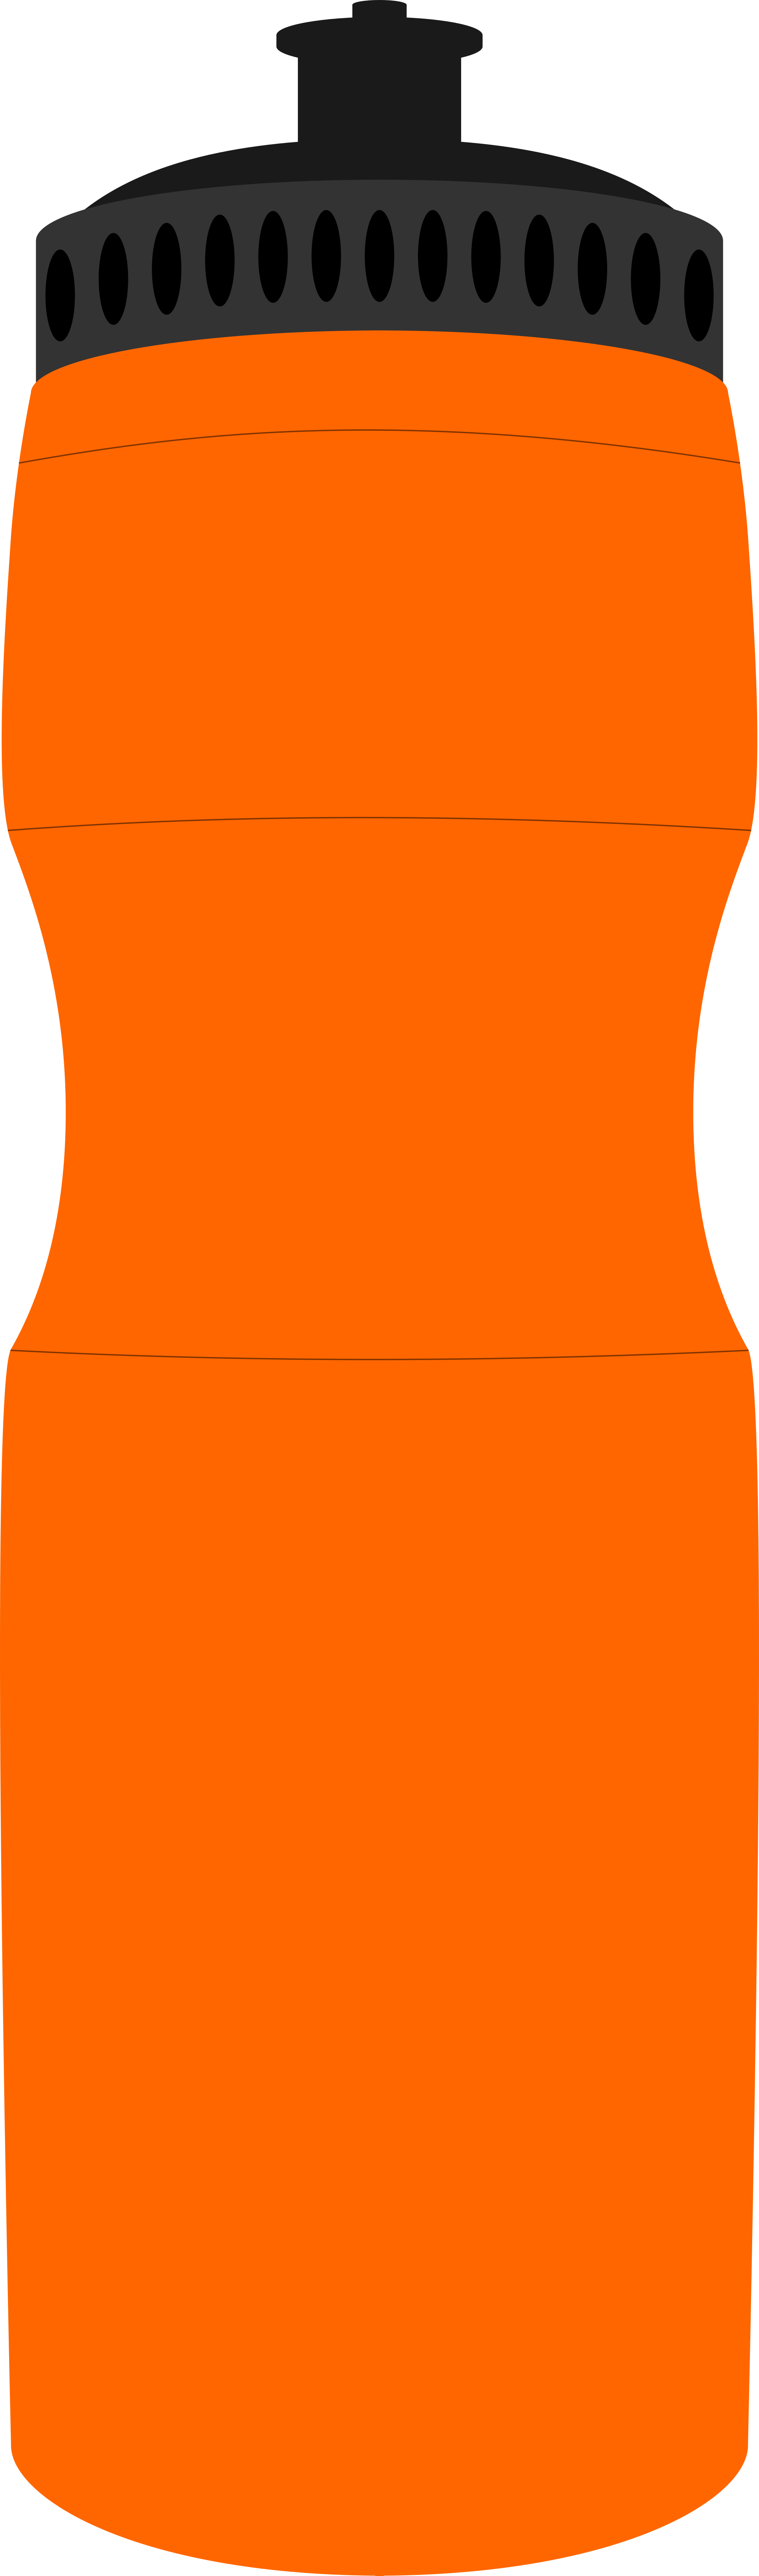 clipart sports orange